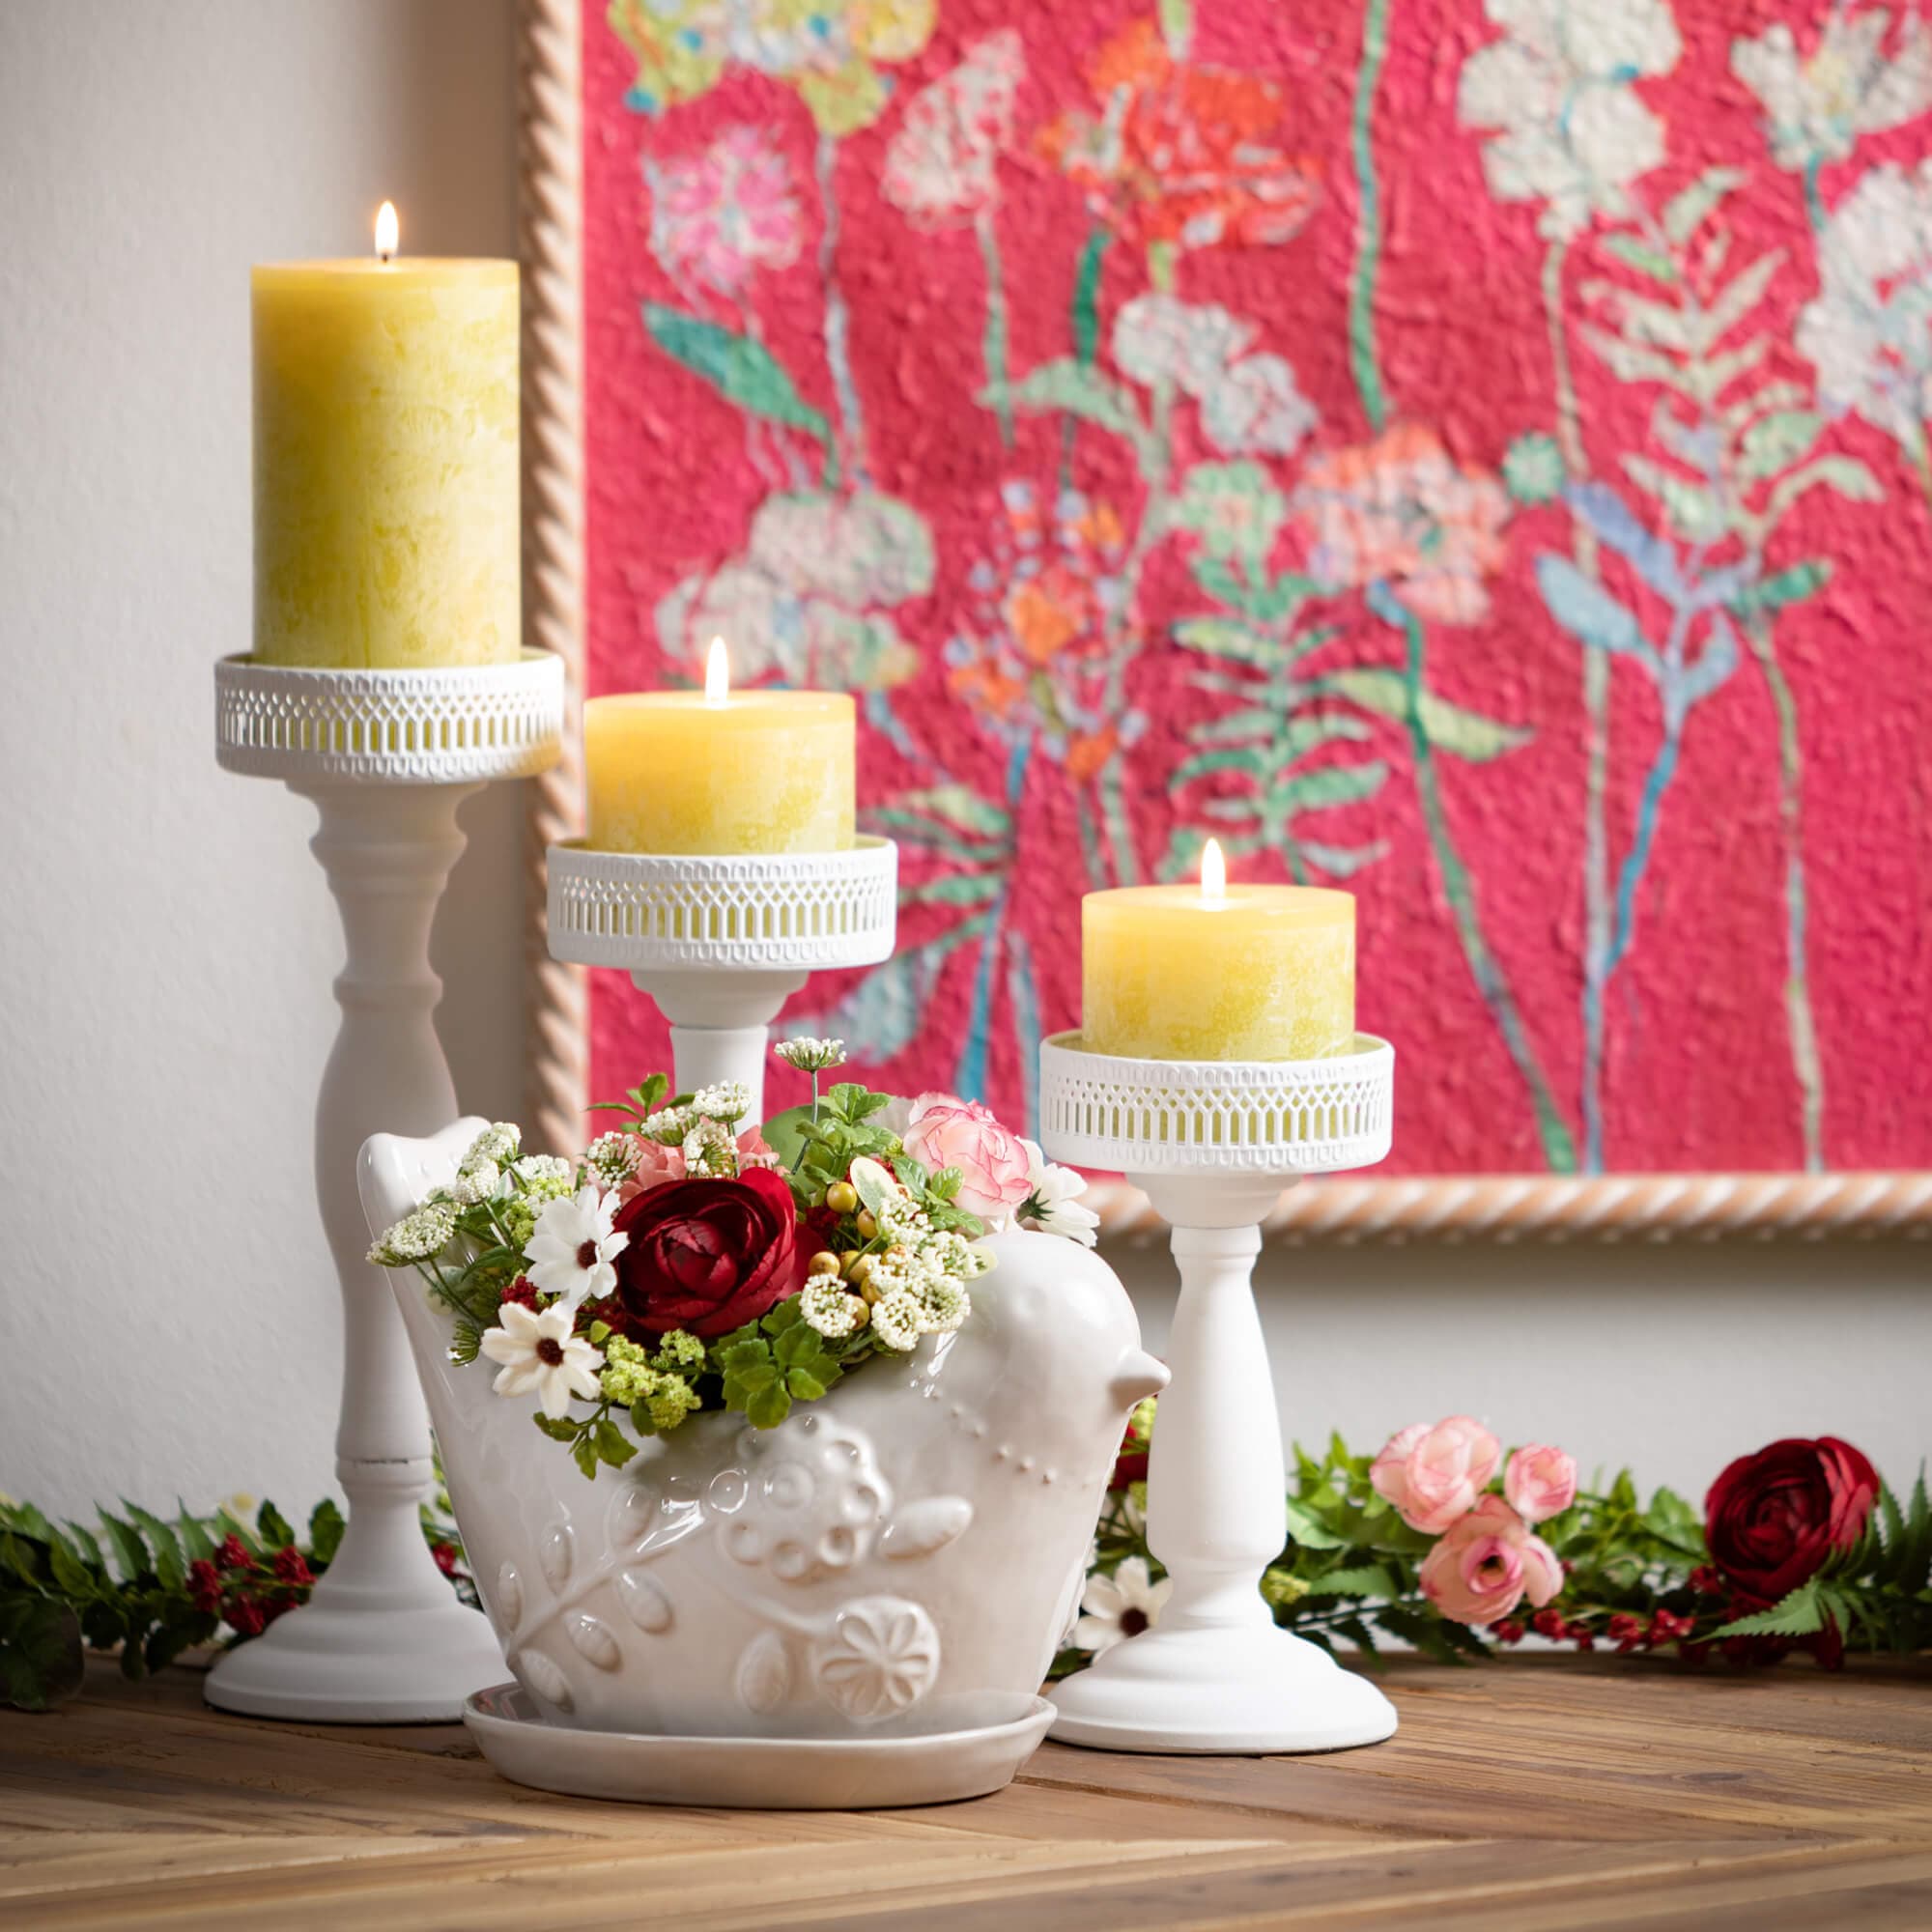 Raised Floral Bird Ceramic Indoor Planters Elevate Home Decor - Outdoors